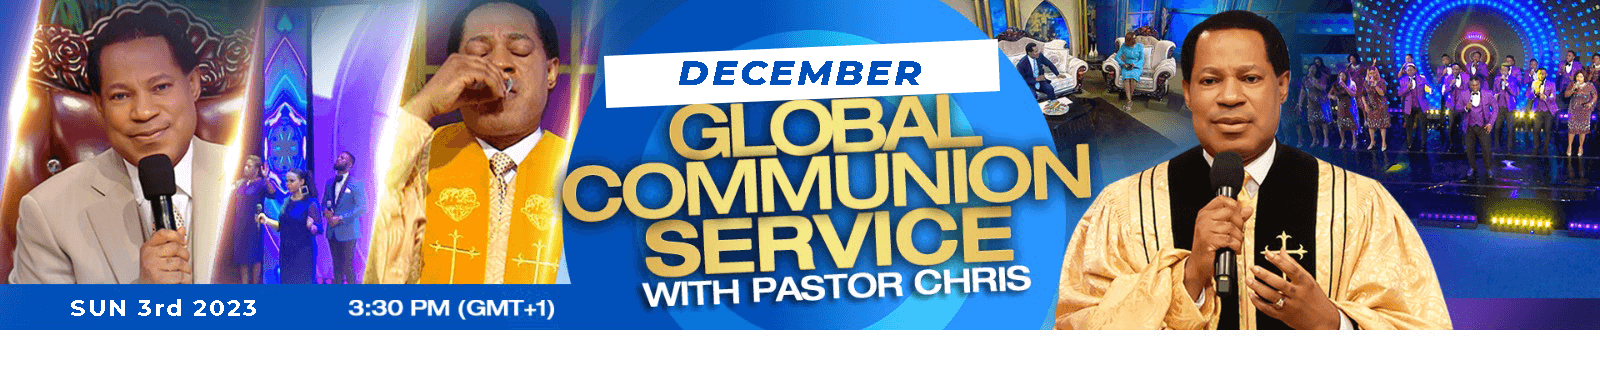 Global Communion Service